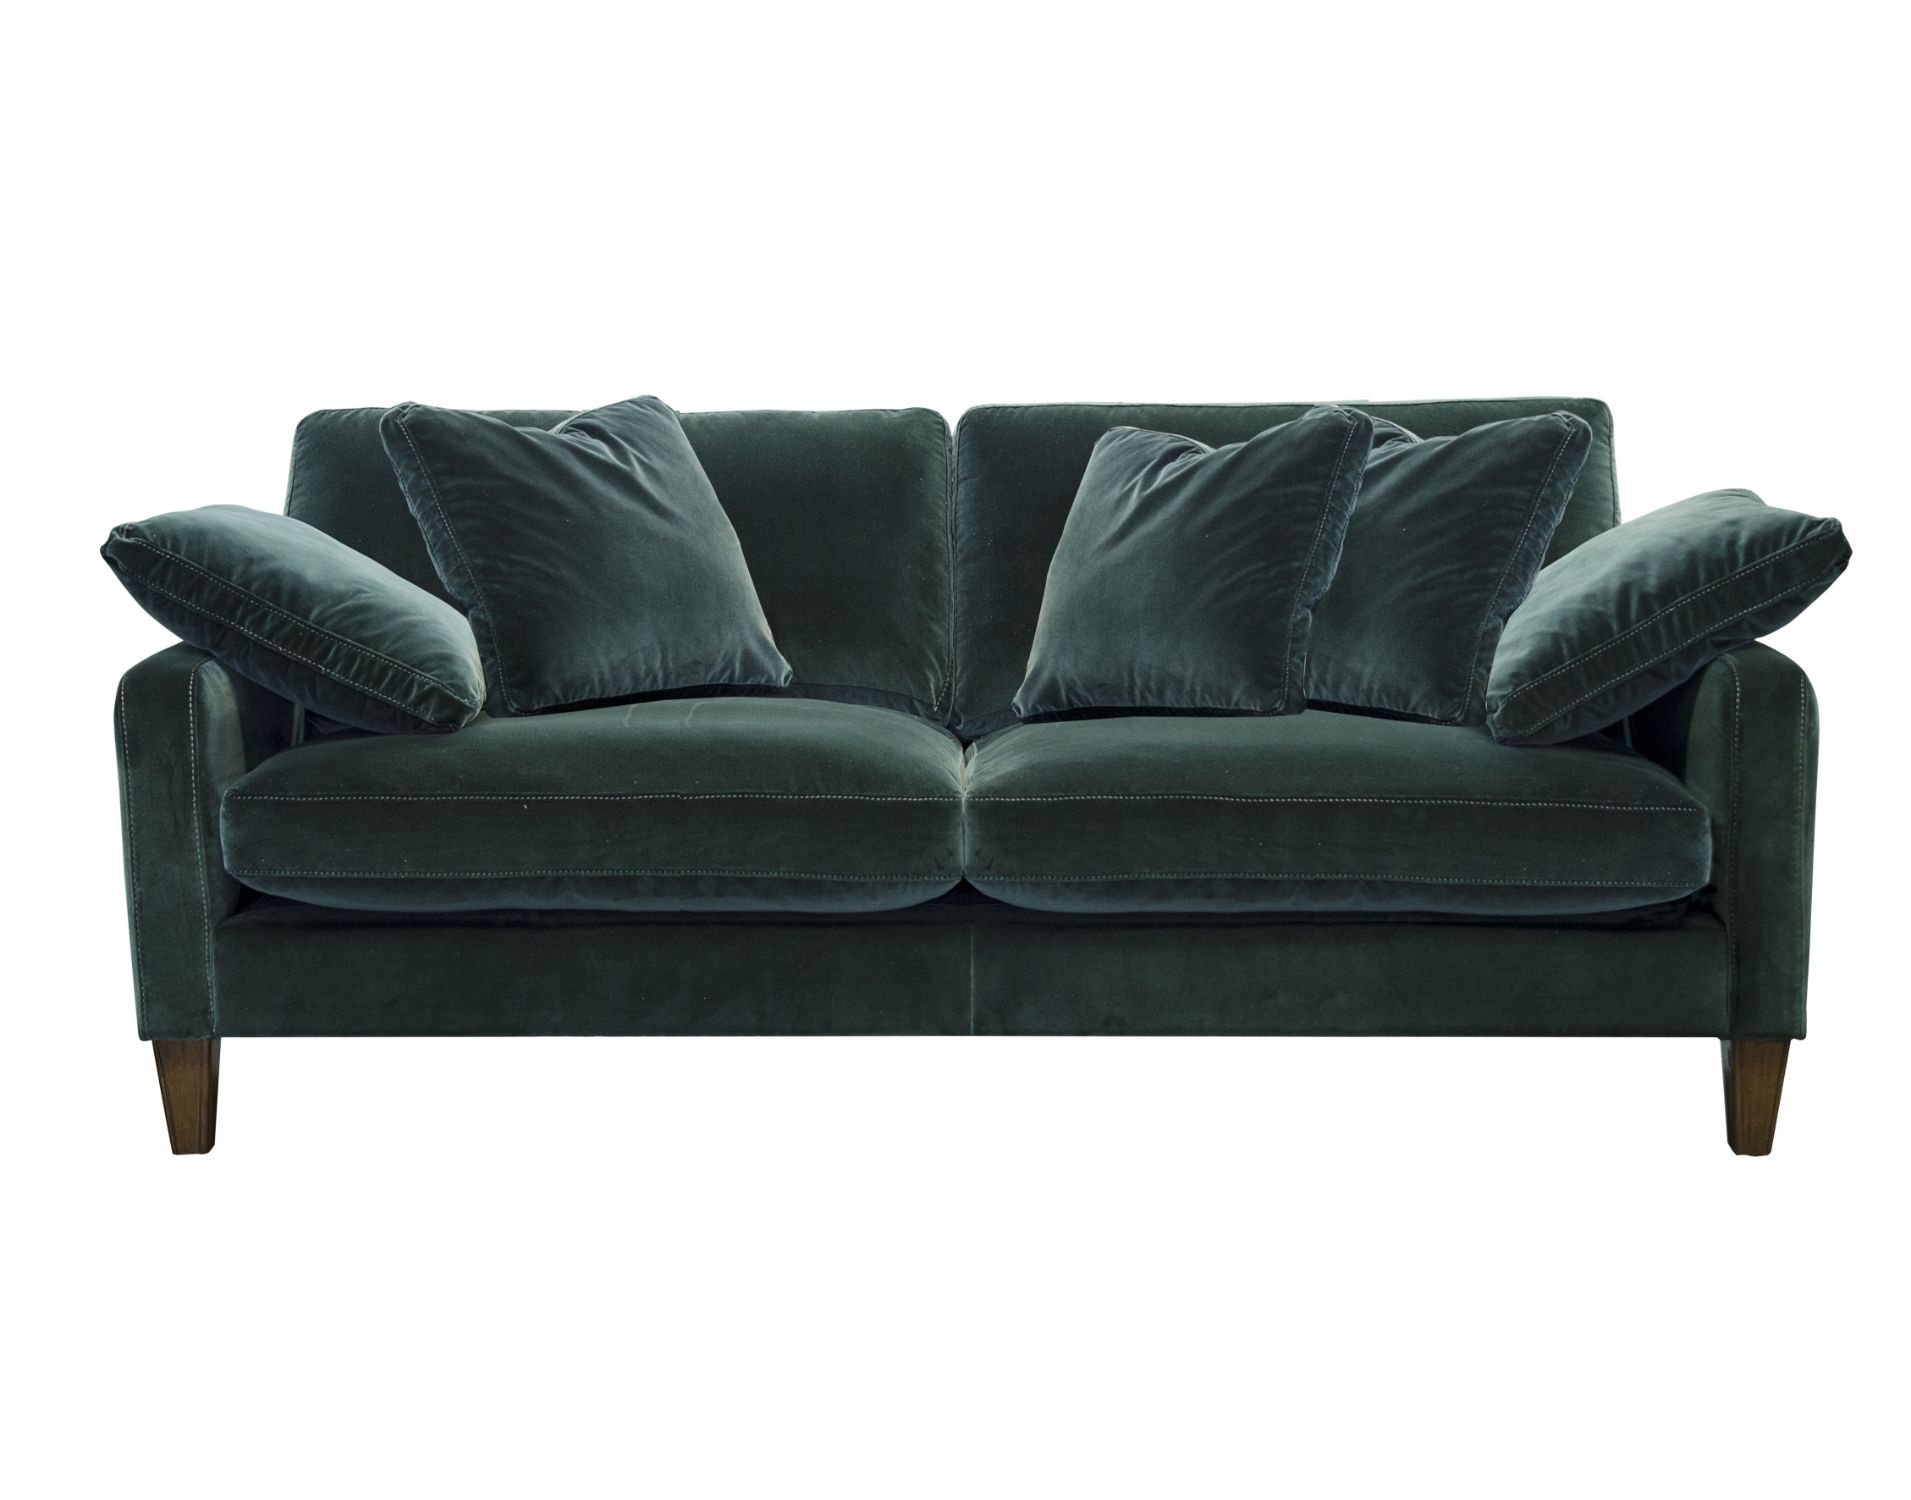 alexander & james hoxton leather small sofa